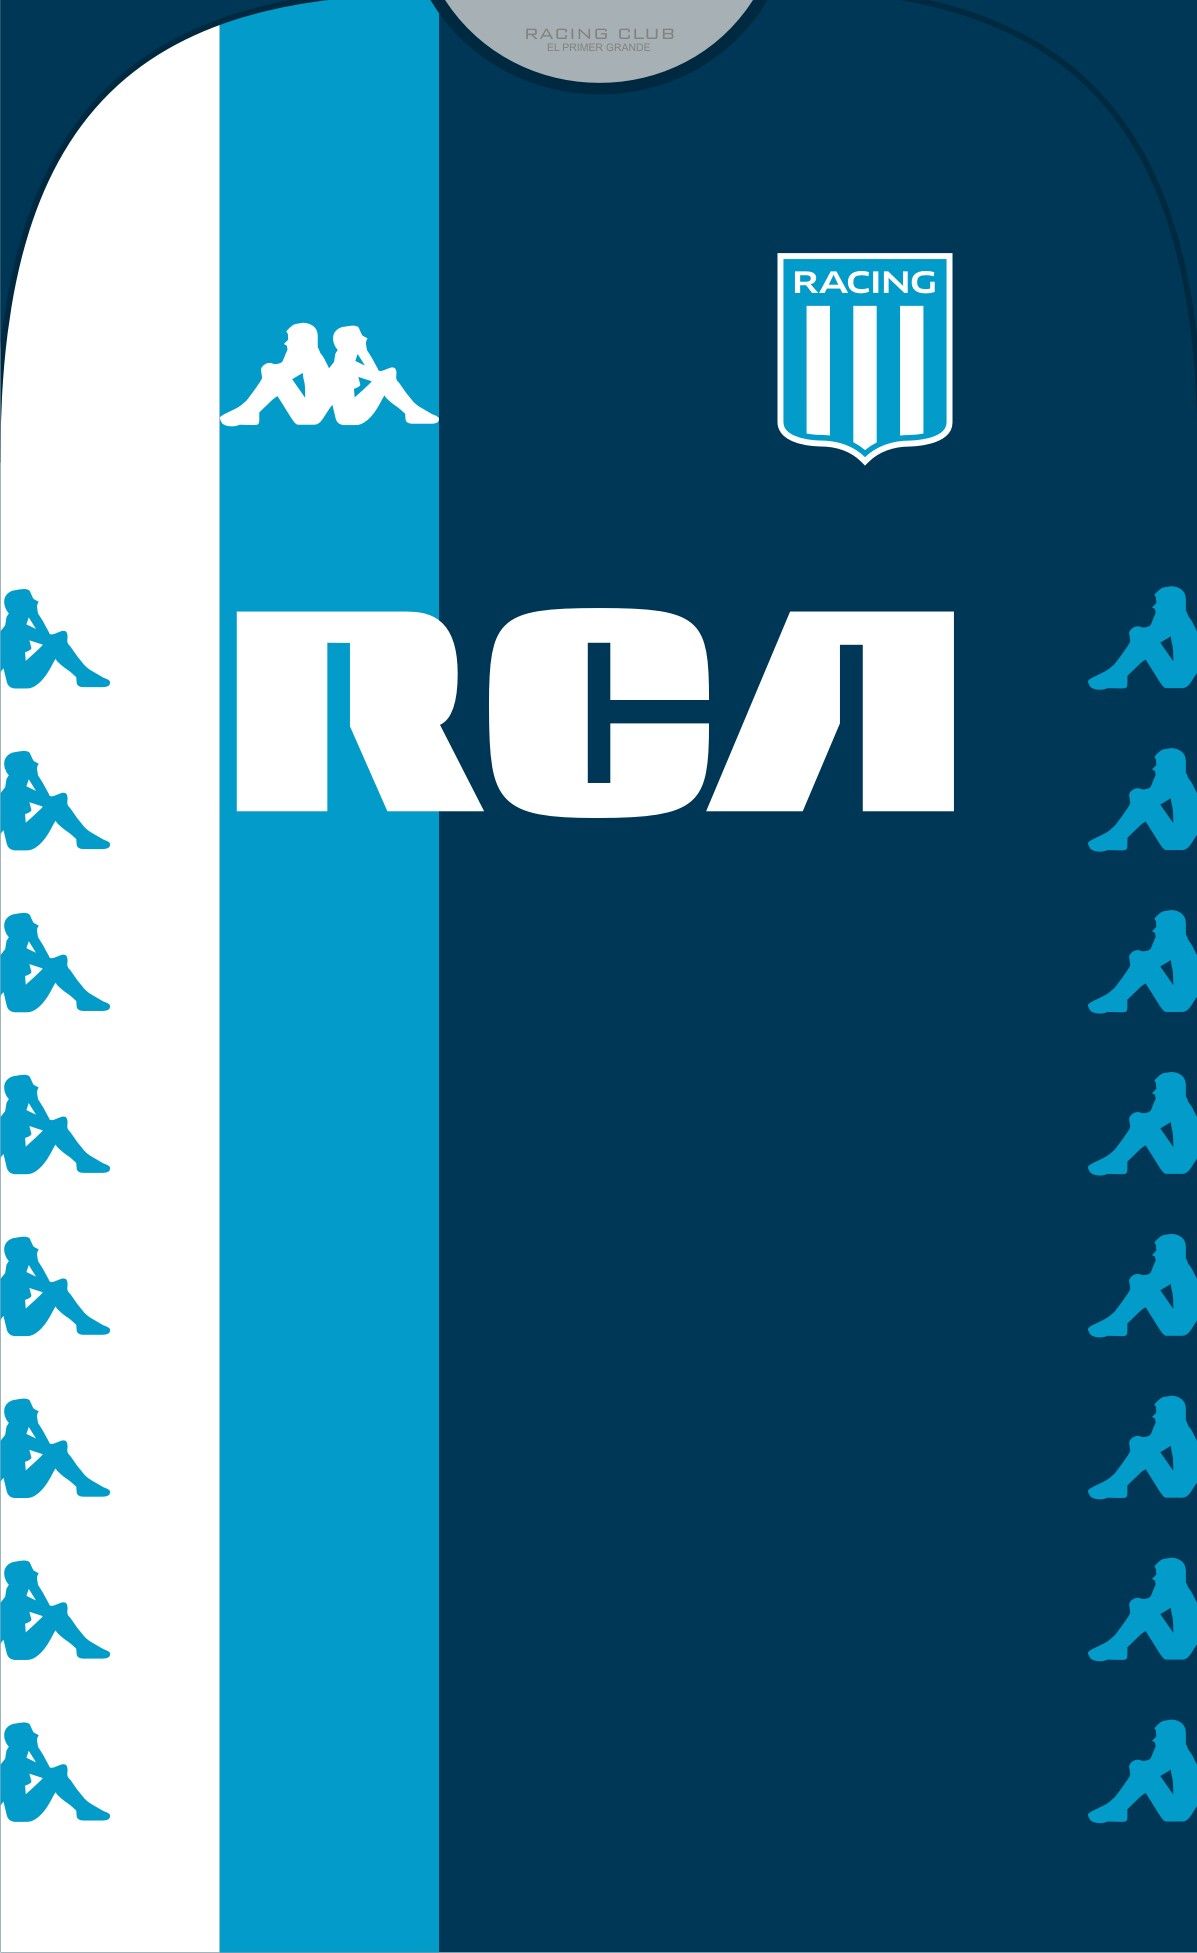 hintergrundbild des rennclubs,blau,text,türkis,aqua,schriftart